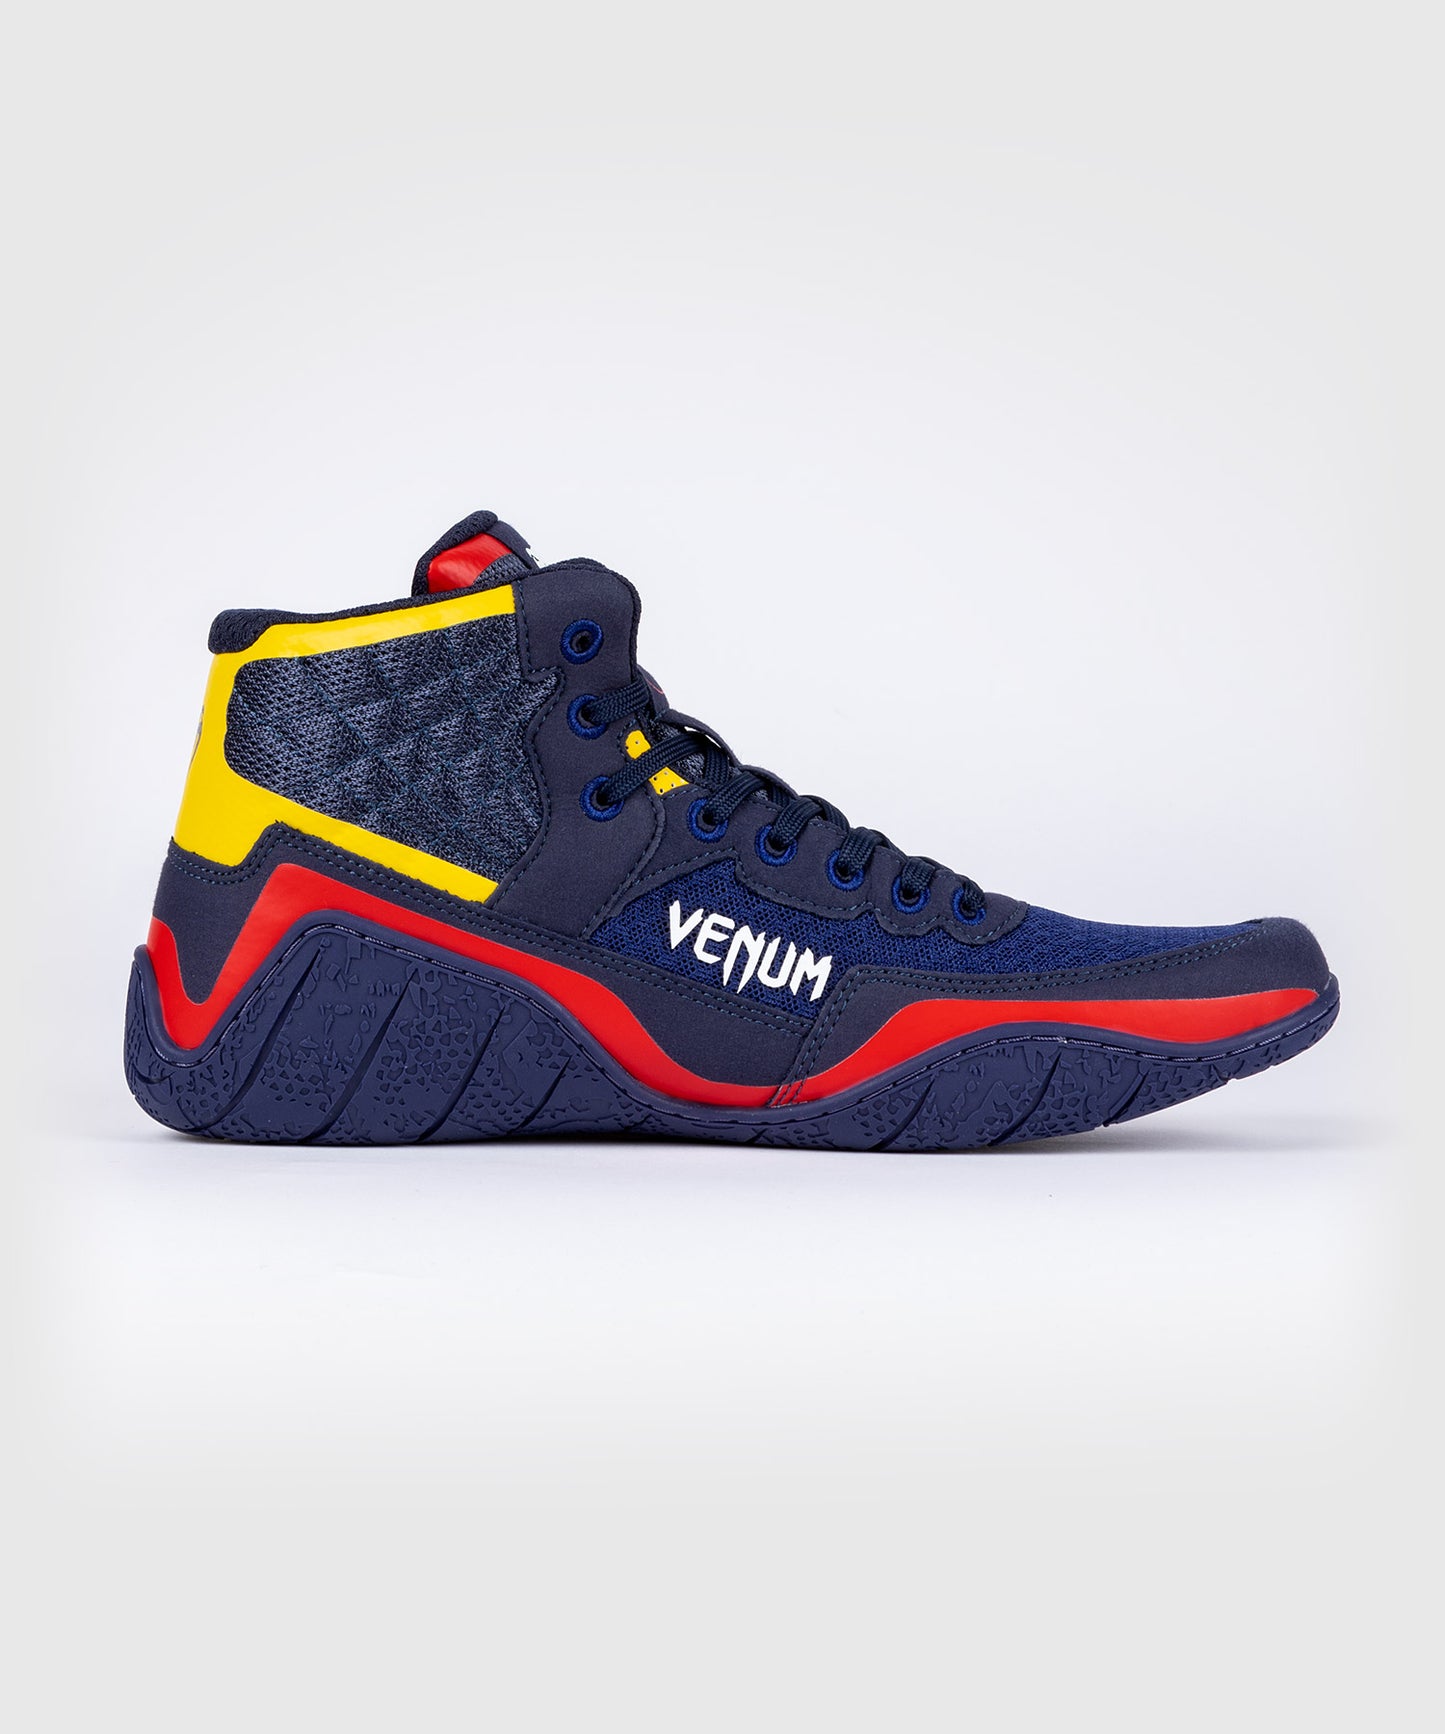 Venum Elite Wrestling Shoes - Blue/Yellow